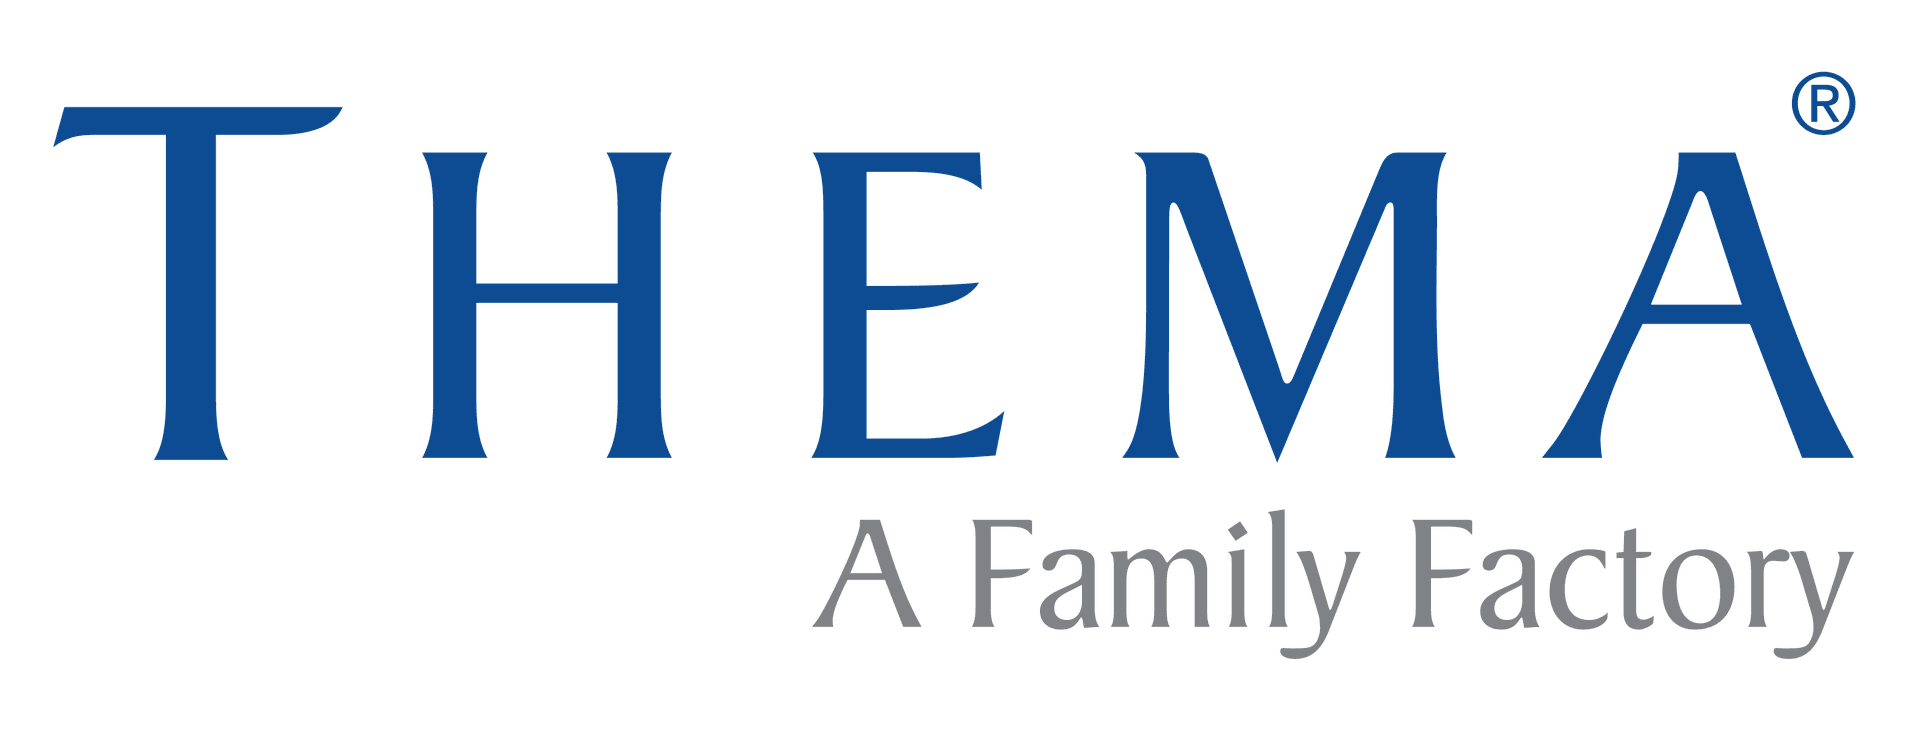 Thema - Family Factory WEBSITE